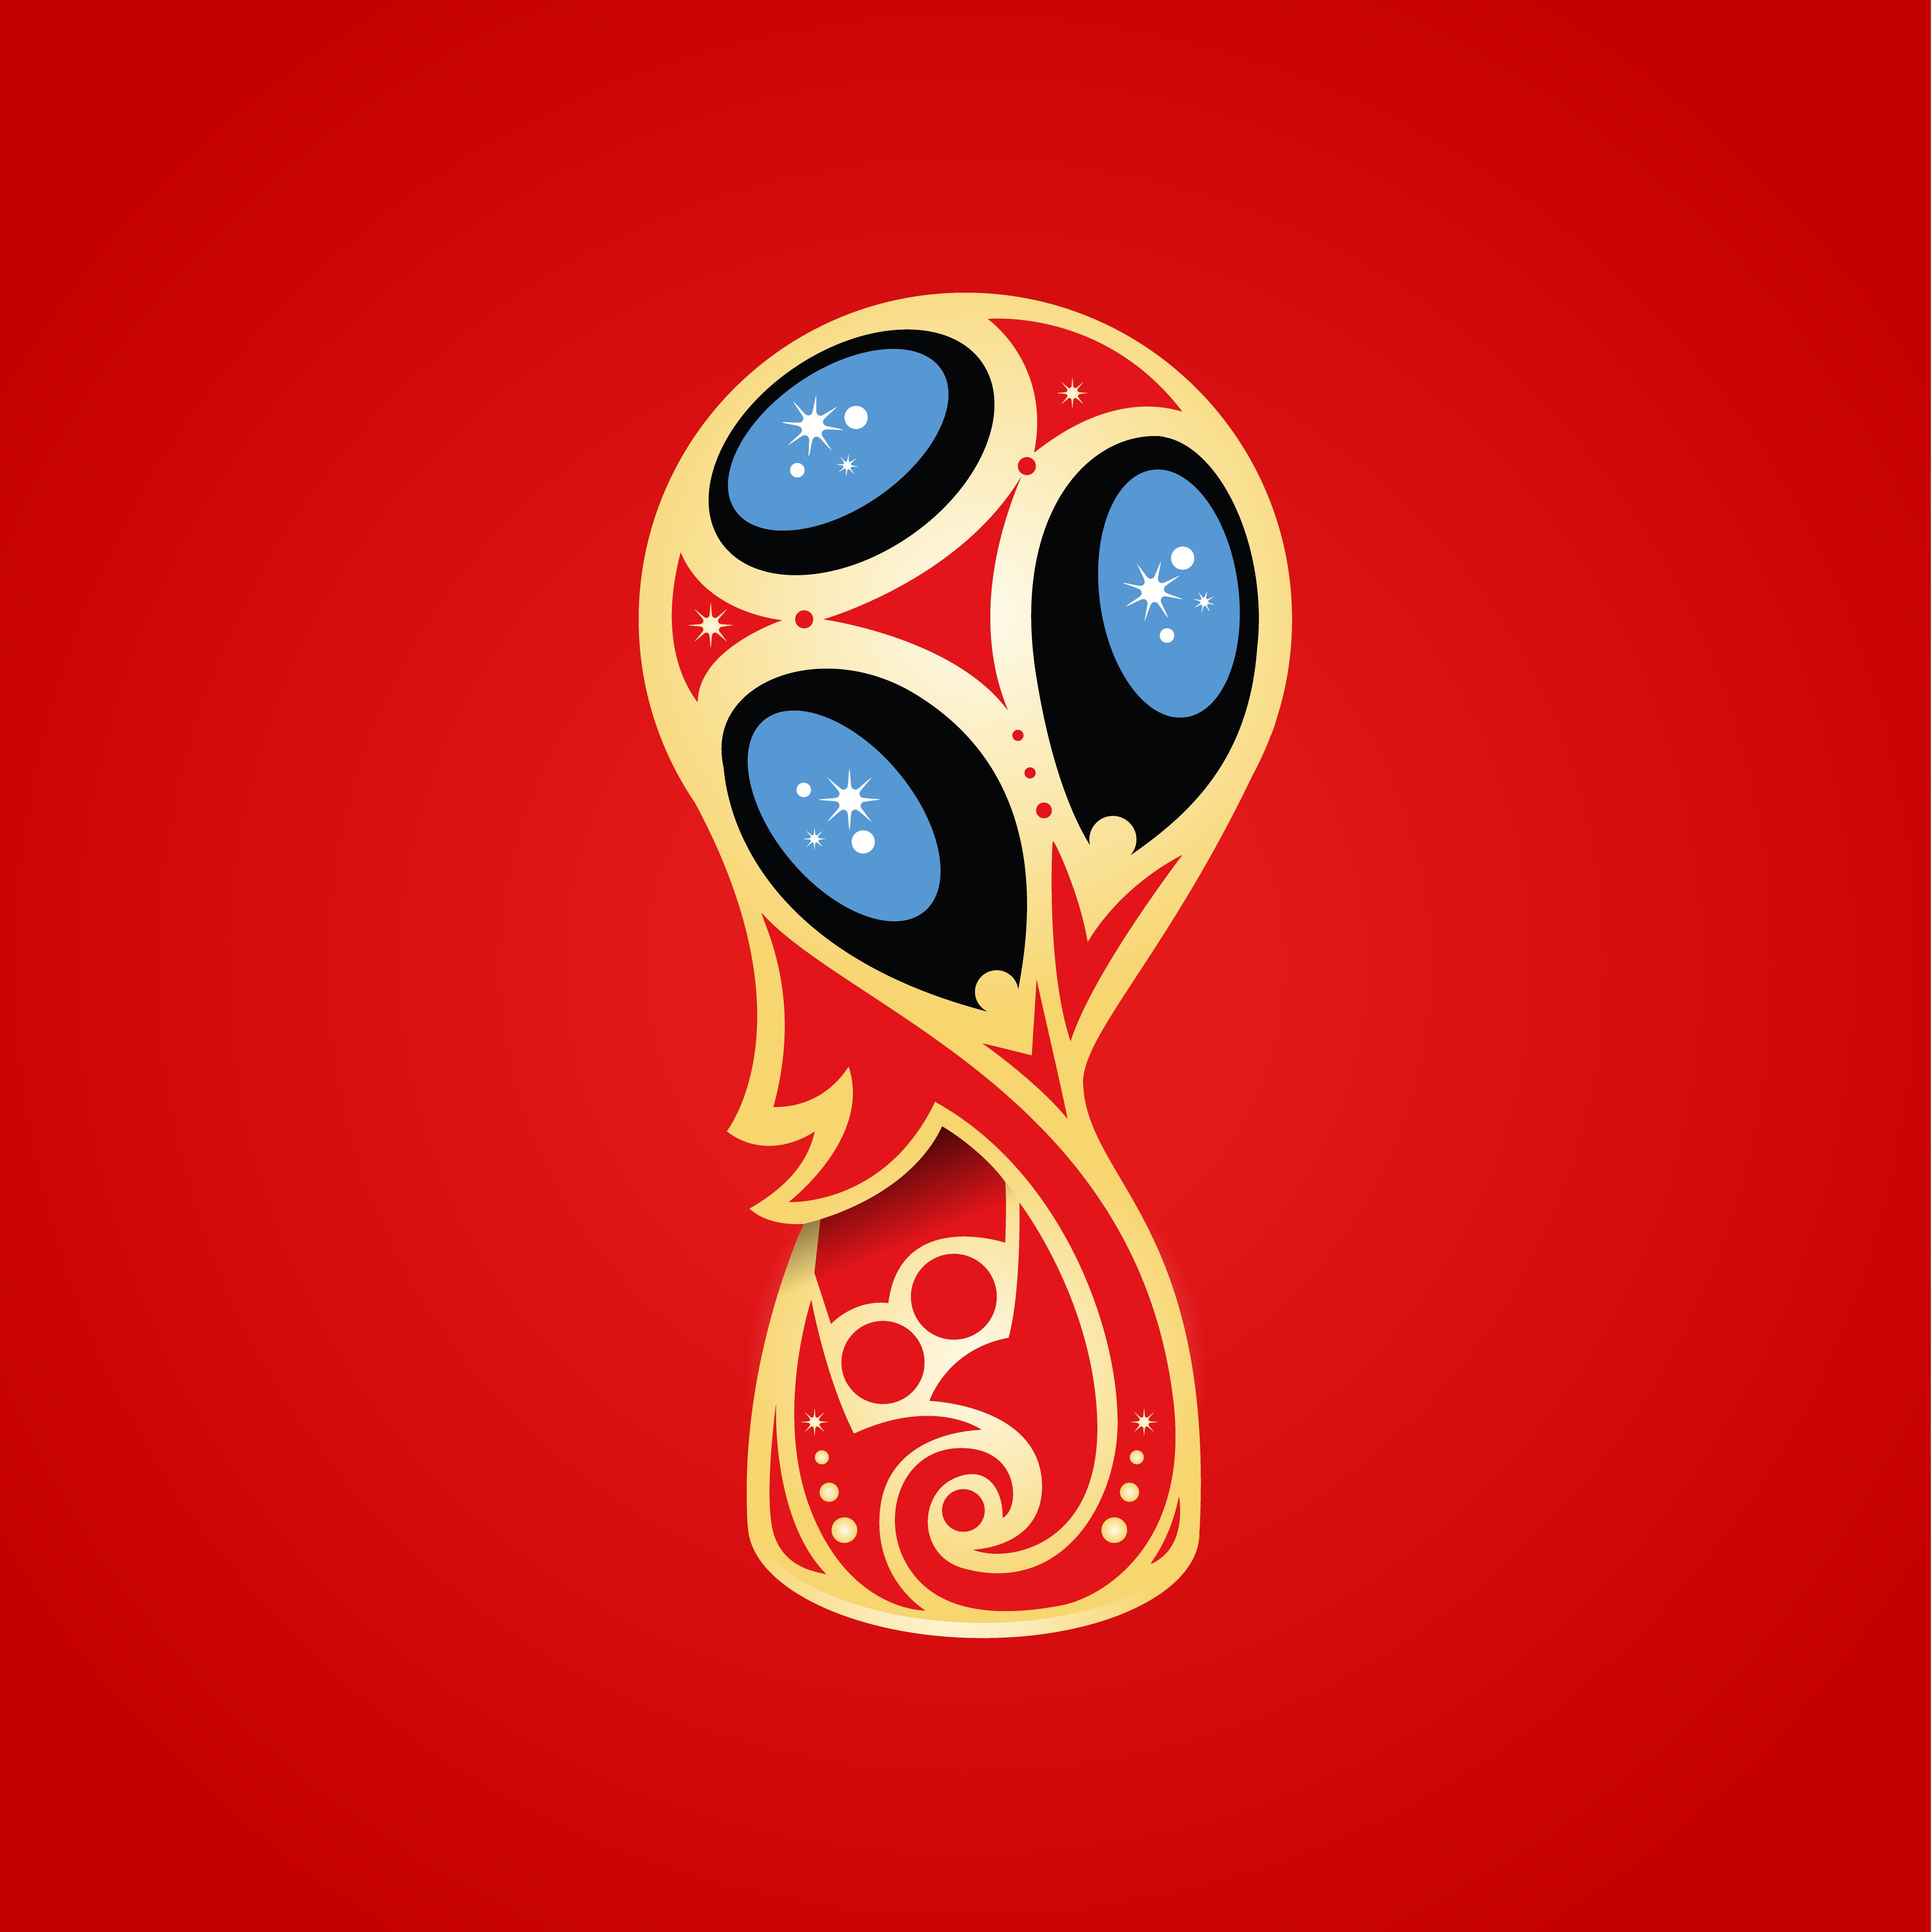 Fifa 2018 россия. FIFA World Cup Russia 2018. FIFA 2018 логотип. ФИФА ворлд кап 2018.